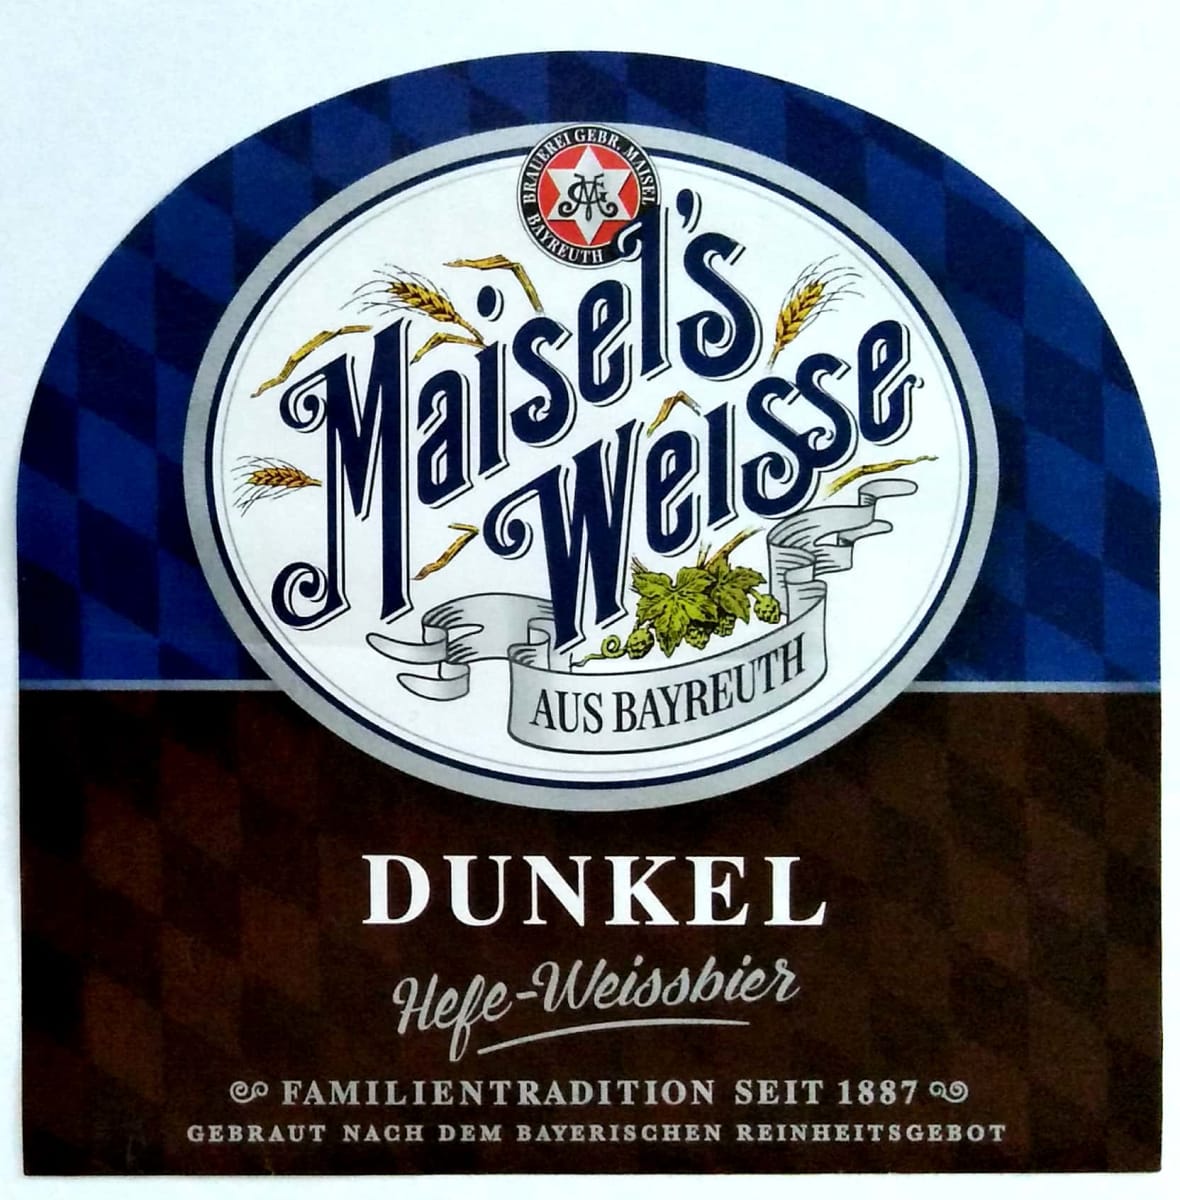 Maisel's Weisse Dunkel v2